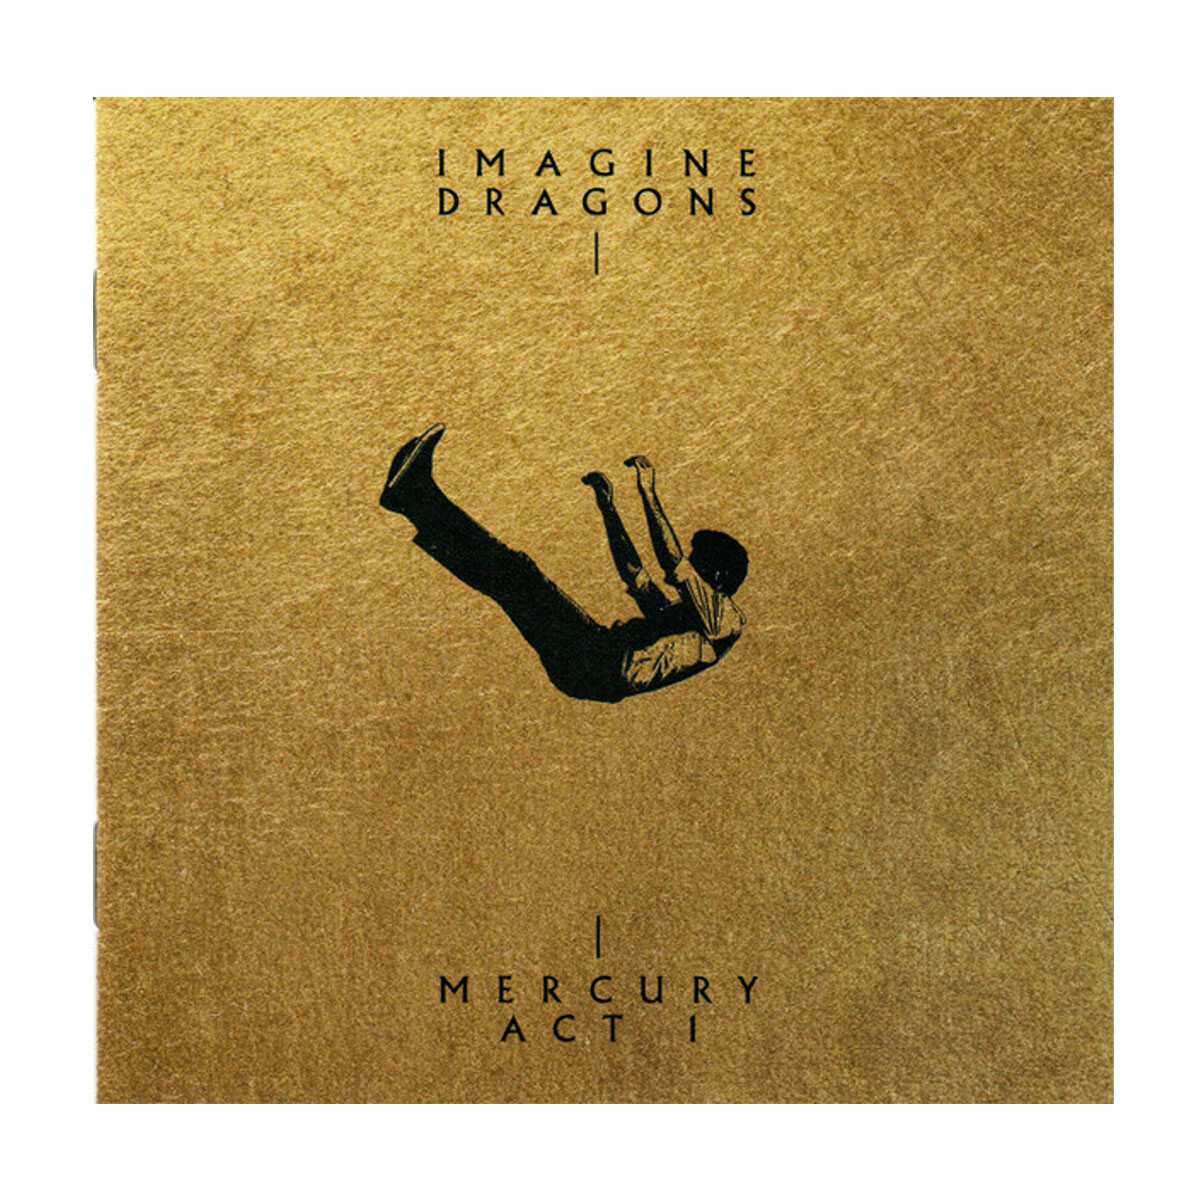 Imagine Dragons - Mercury -act 1 - Cd 